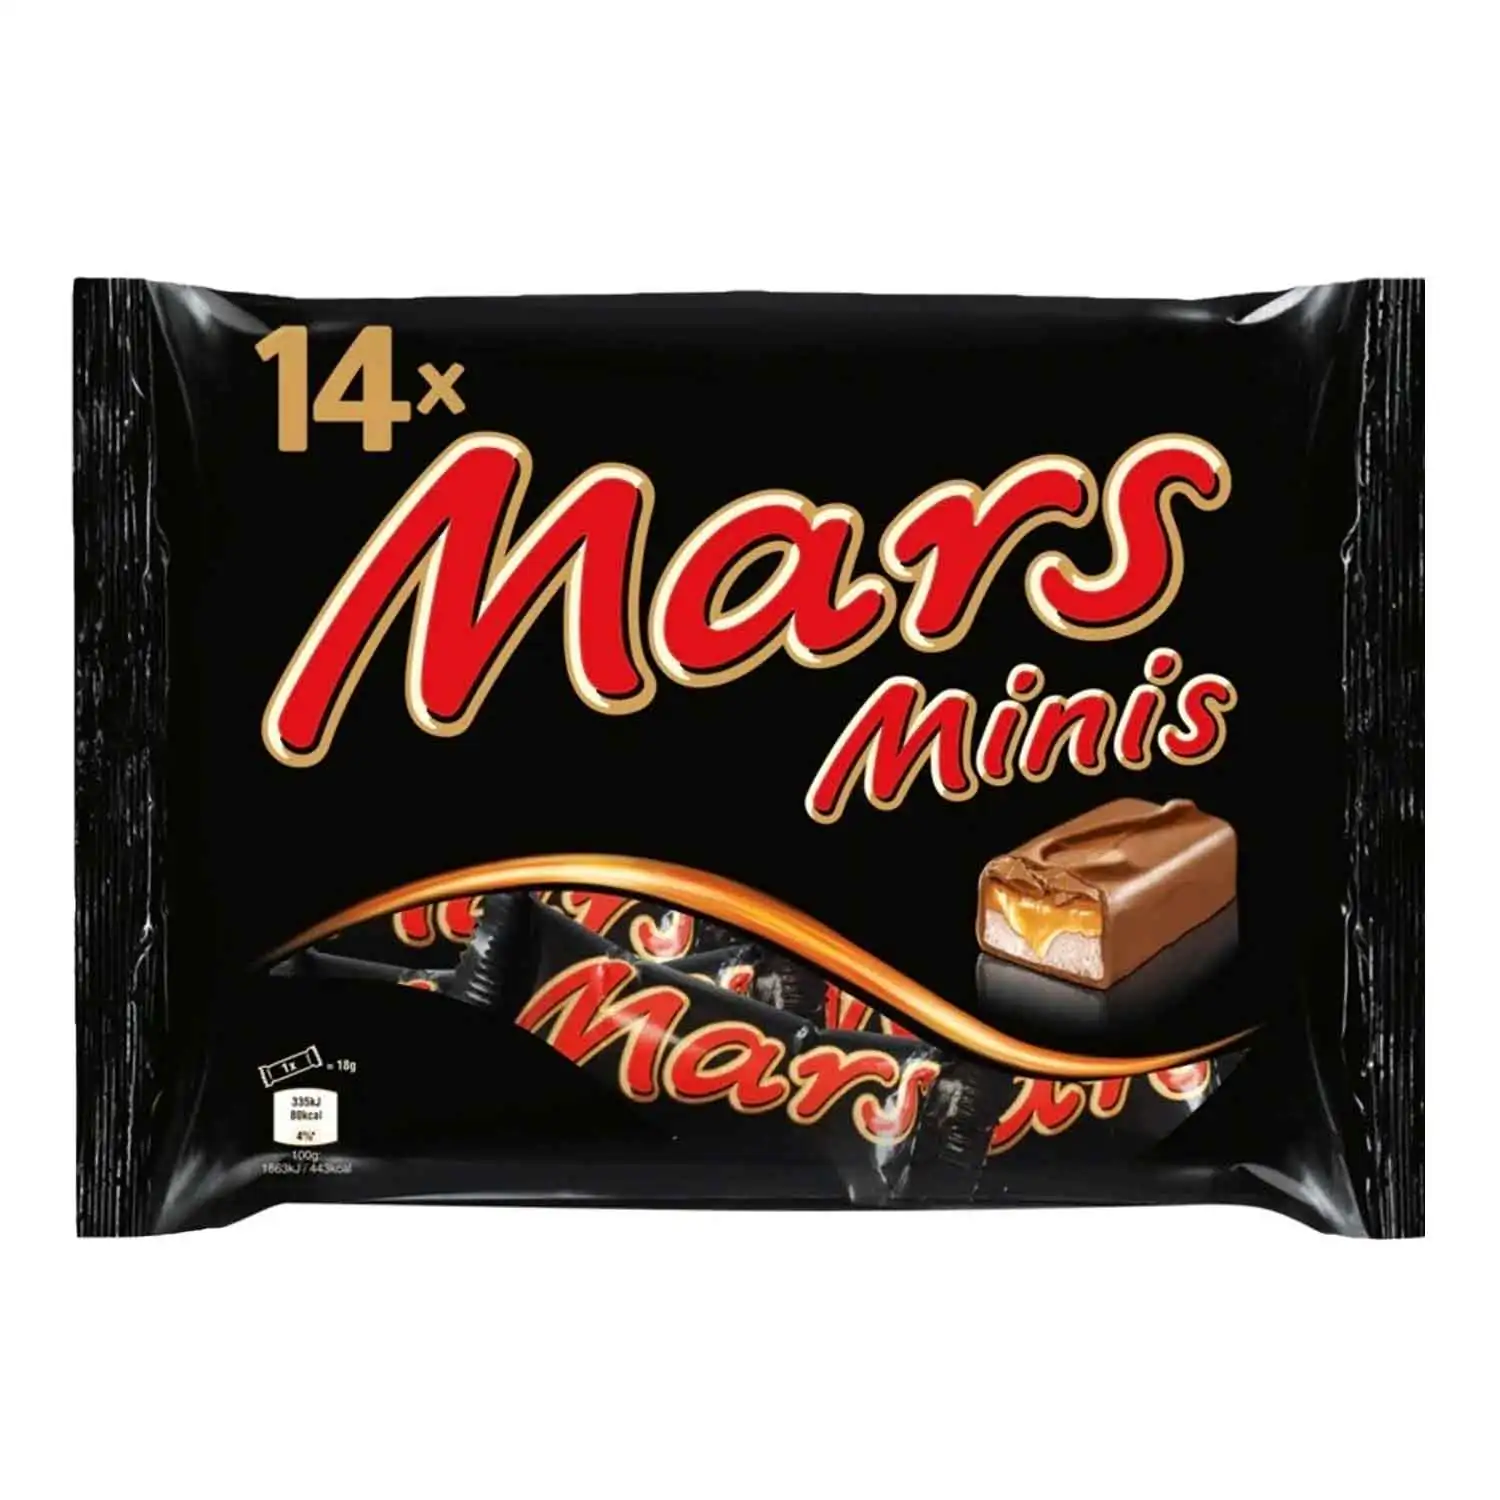 Mars minis 275g